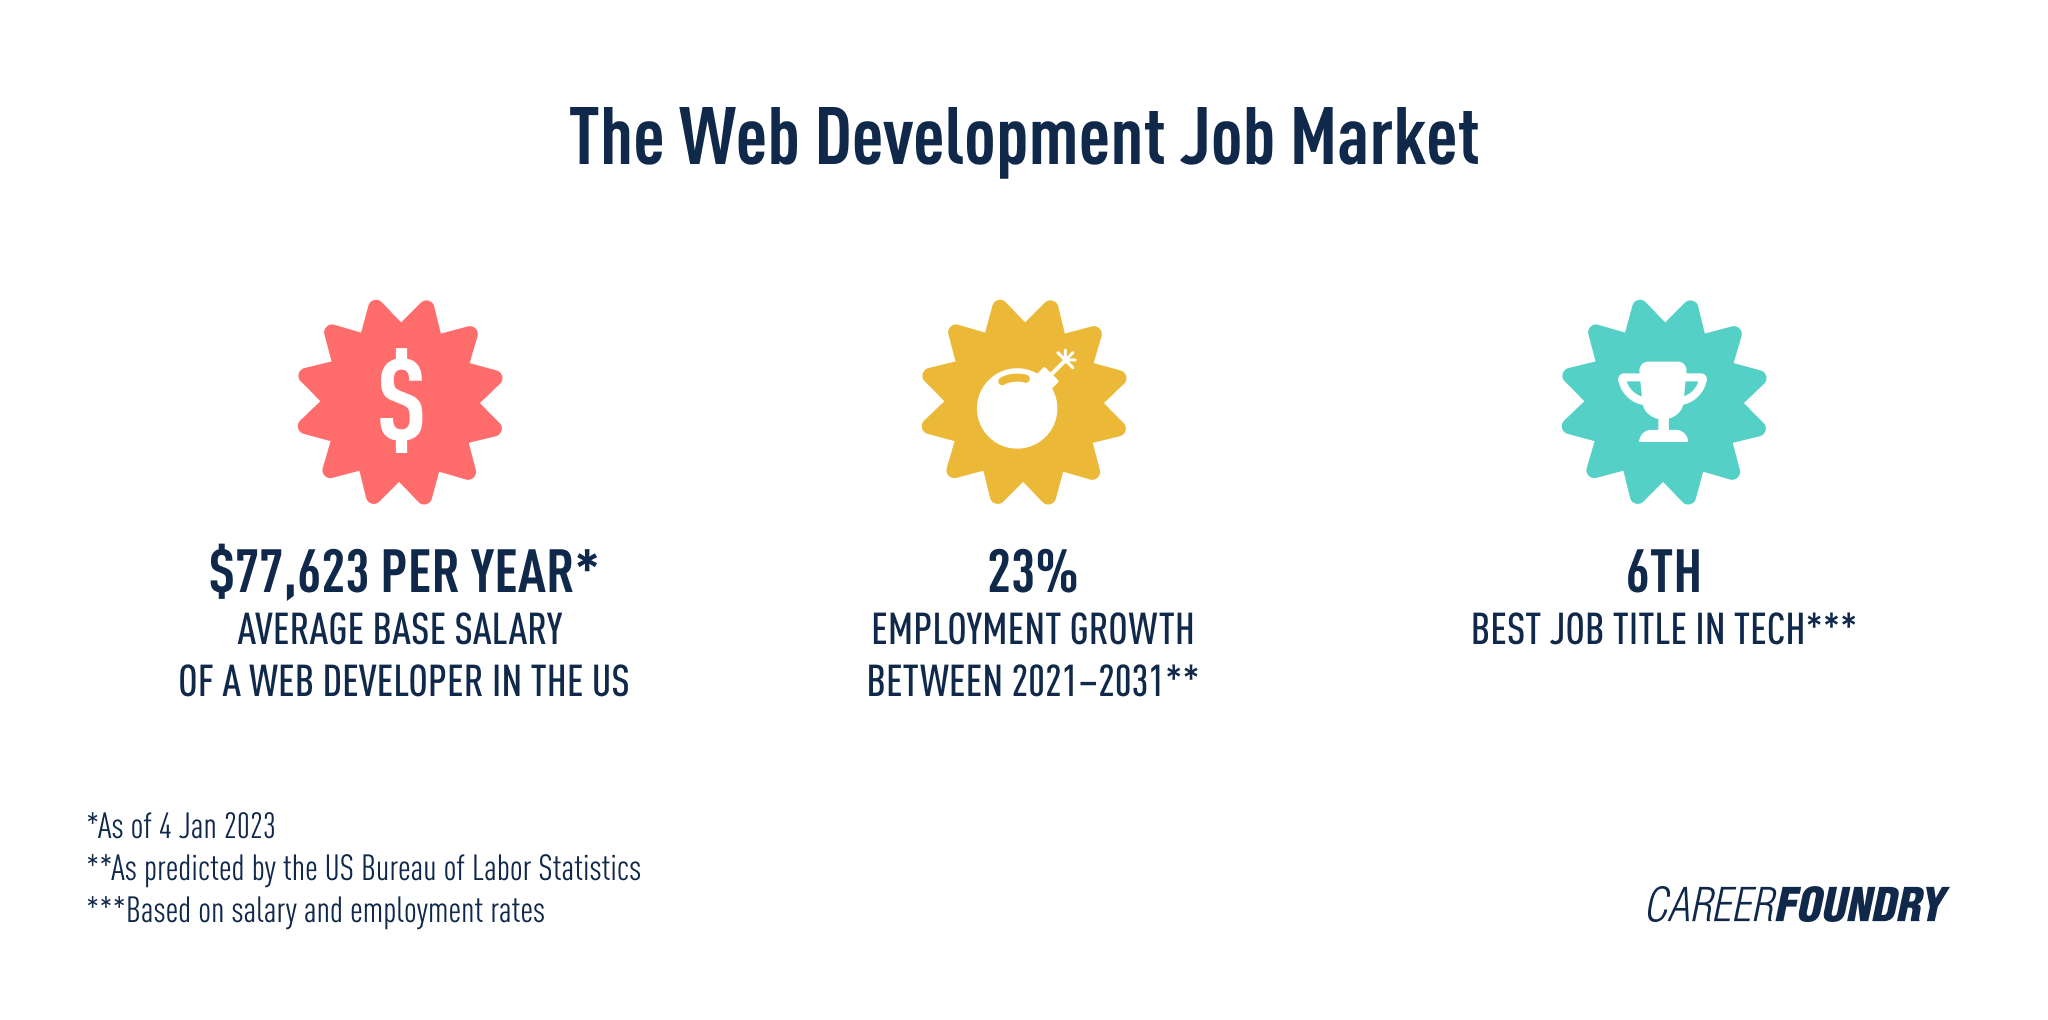 Infographic with statistics regarding the web development job market.